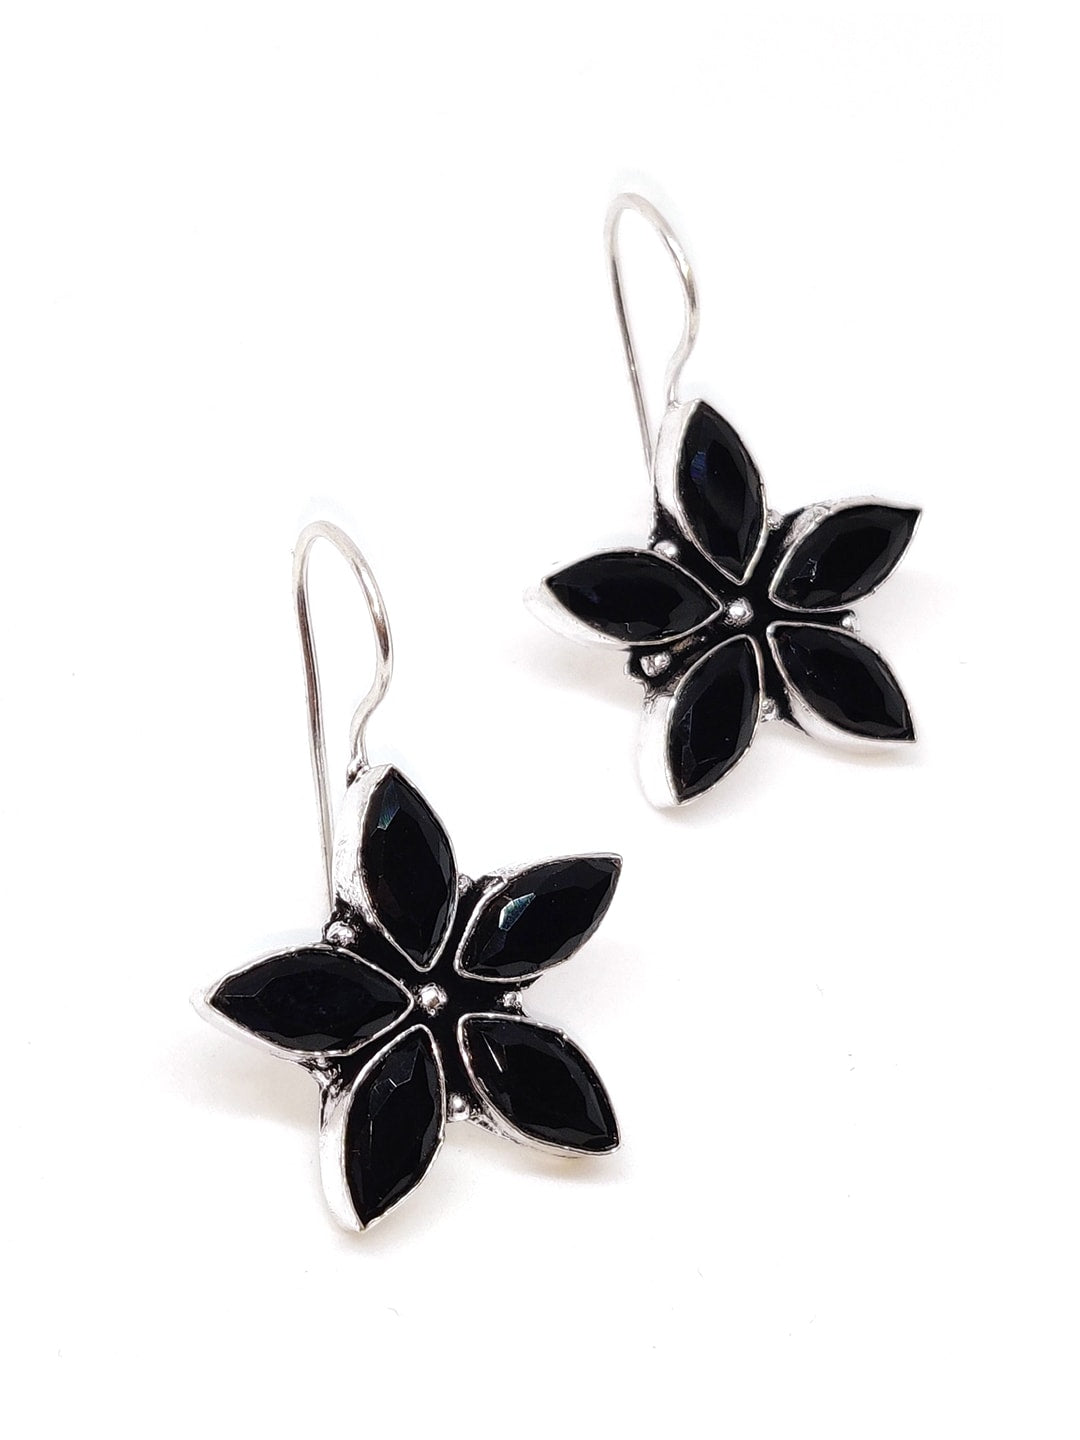 EL REGALO Silver-Toned & Black German Silver Star Shaped Drop Earrings - for Women and Girls
Style ID: 16770274